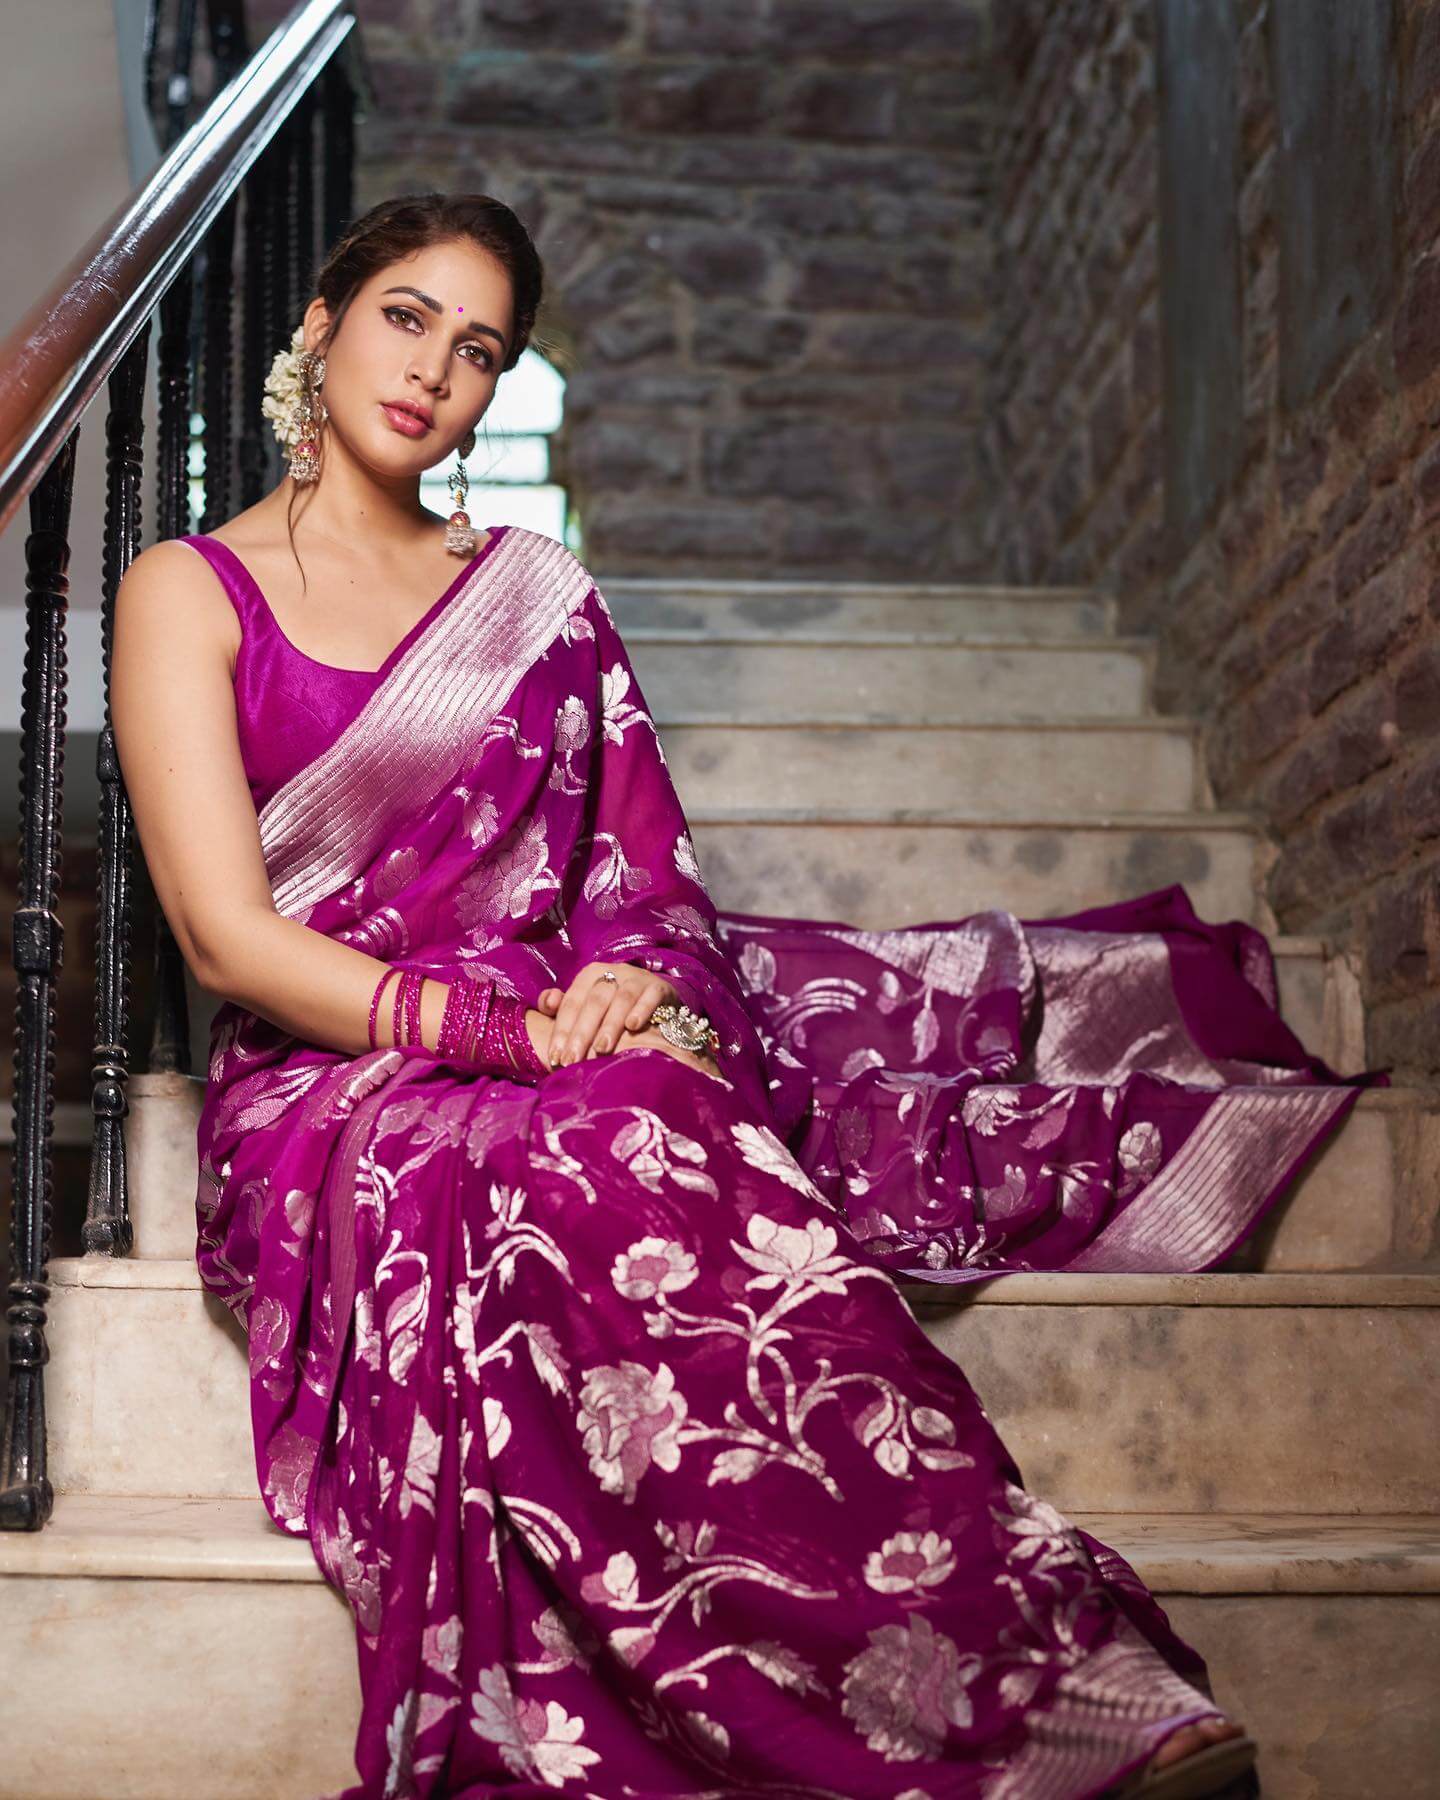 Telgu Actress Lavanya Tripathi Mesmerizing Look In Purple & Silver Floral Printed Saree With Sleevless Blouse